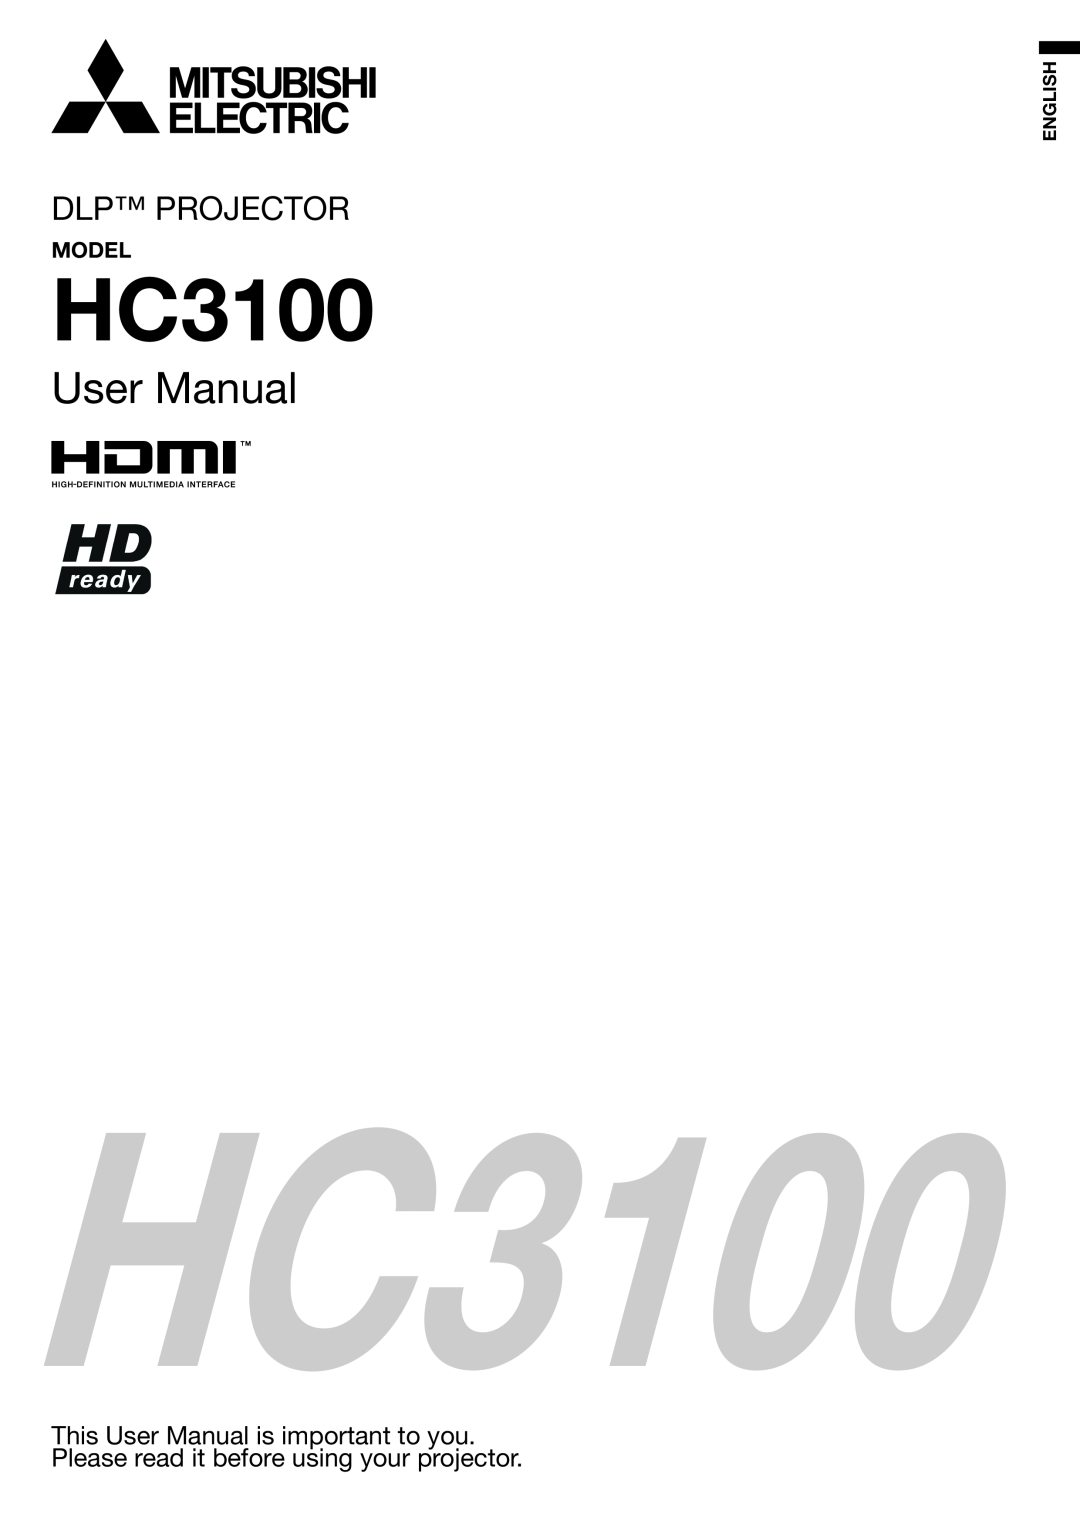 Mitsubishi Electronics HC3100 user manual Model, User Manual, Dlp Projector, English 